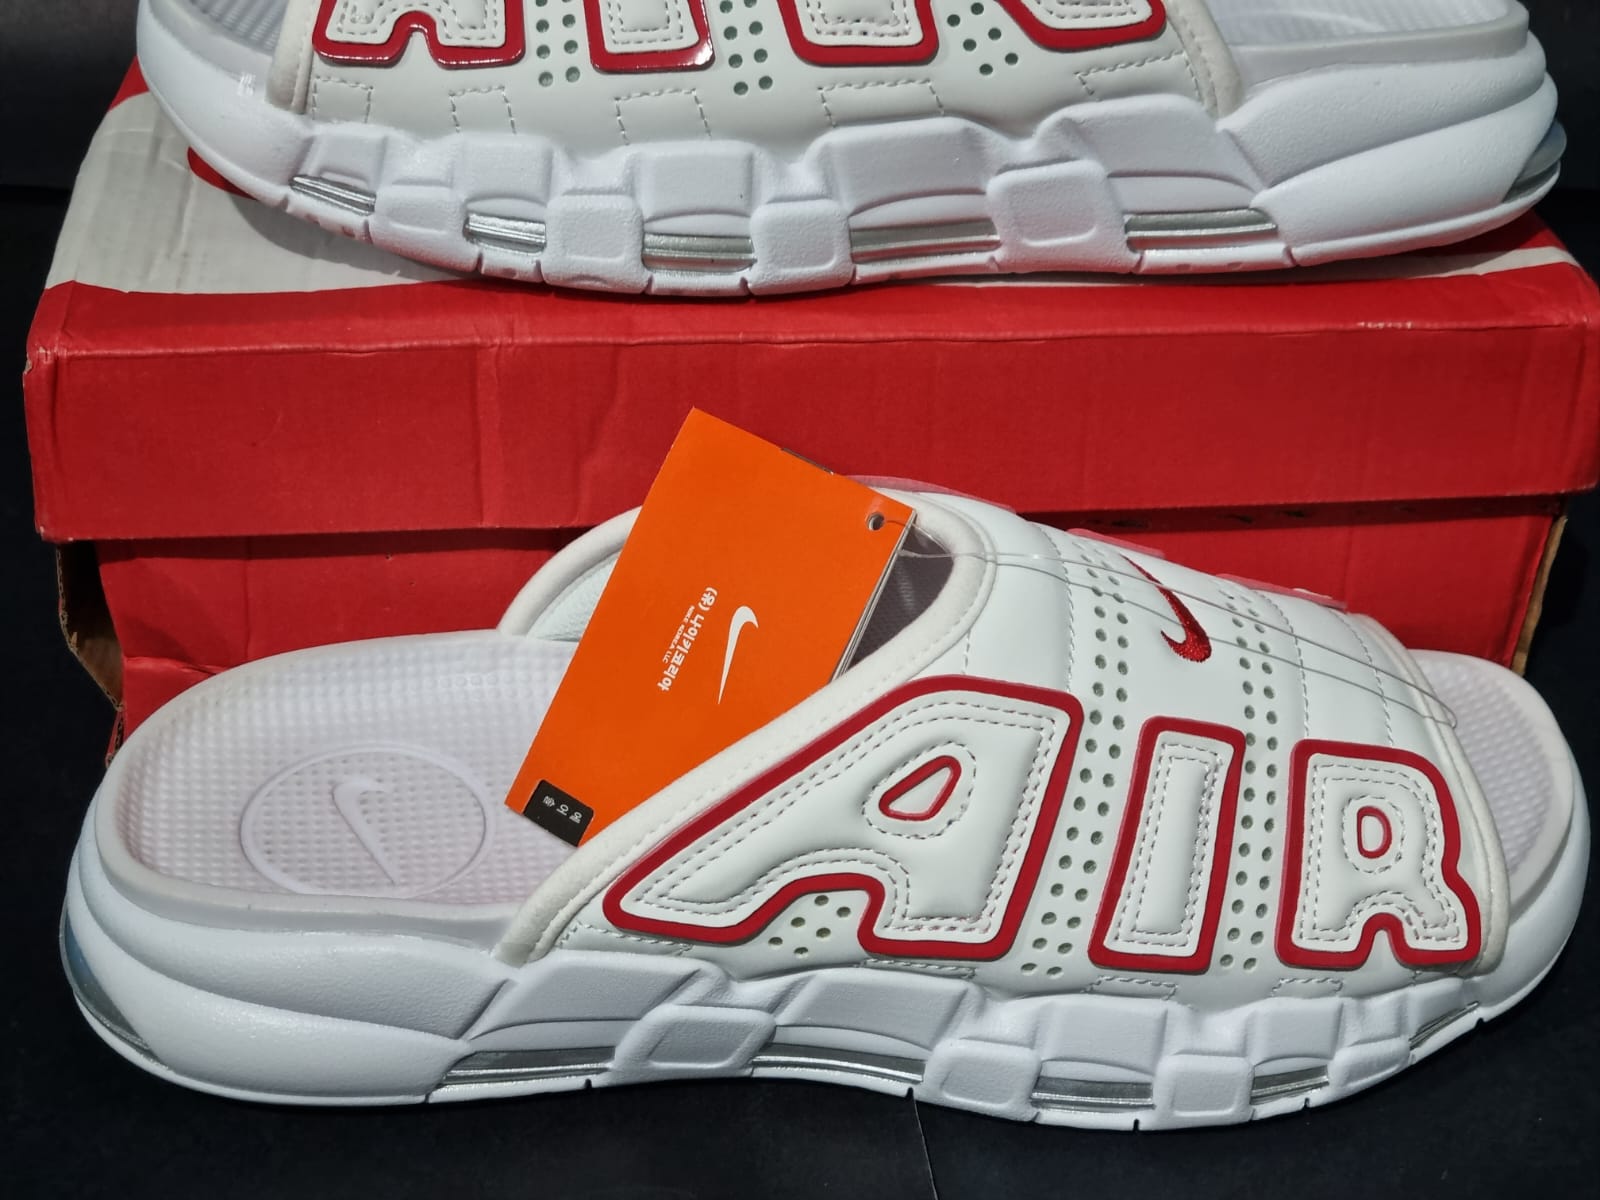 Chinelo Nike Air More Uptempo Slide White University red